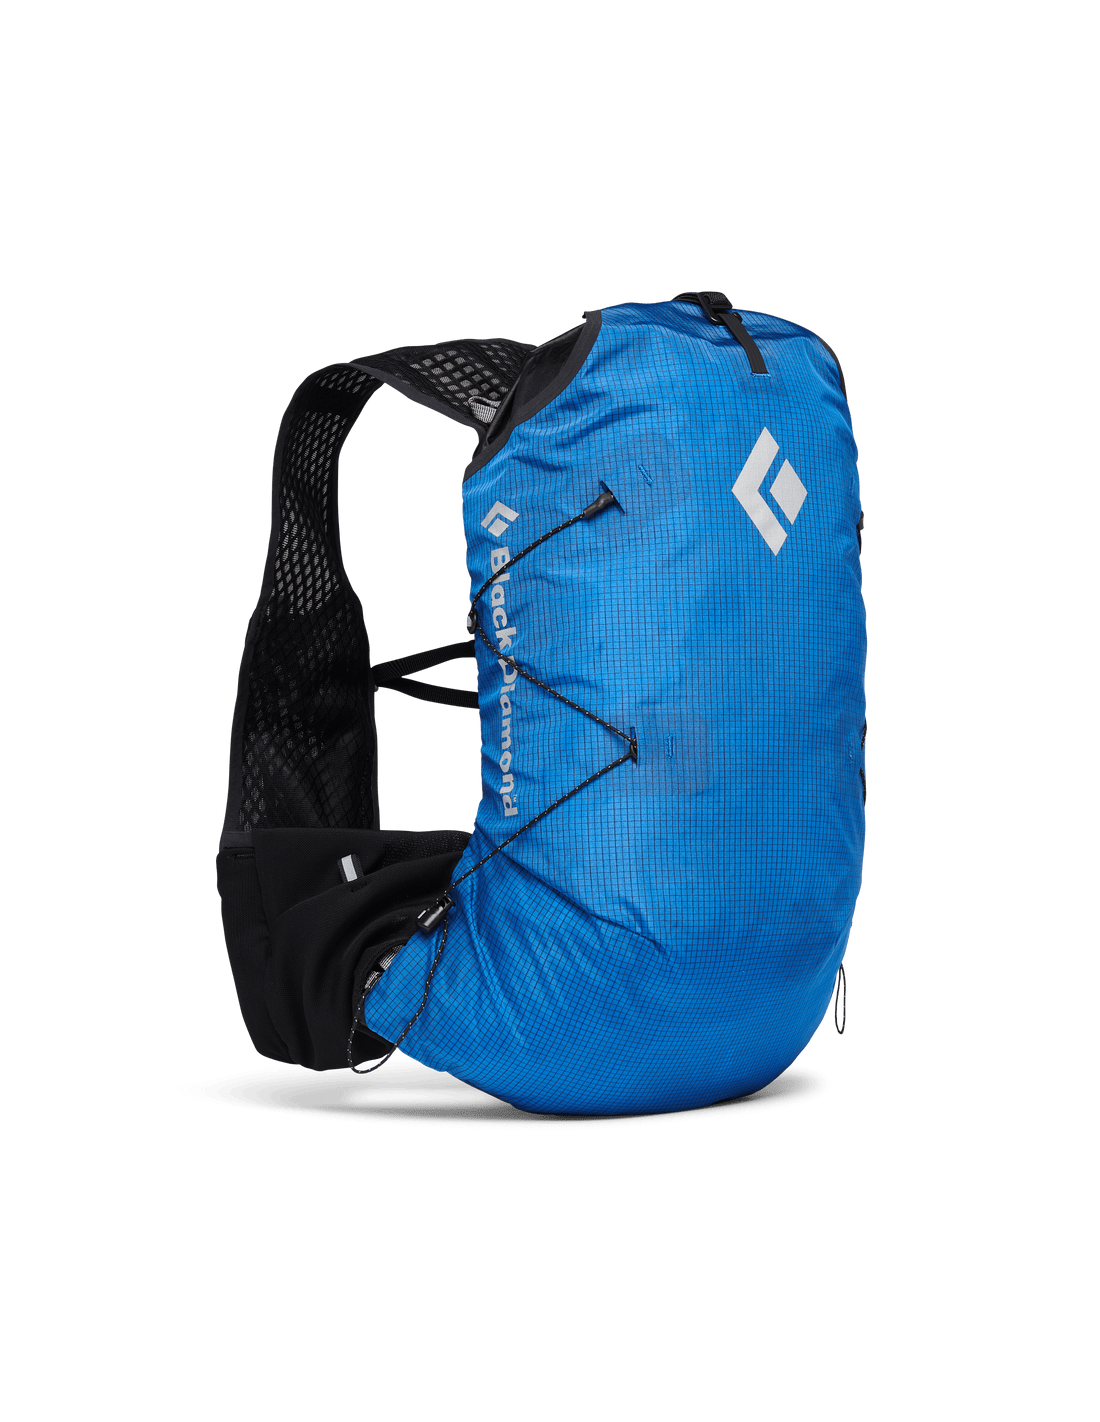 Black Diamond Rucksack Distance 8 Backpack, Large, Ultra blue Rucksackart - Berglauf & Trailrunning, Rucksackfarbe - Blau, Rucksackvolumen - 6 - 10 Liter, von Black Diamond